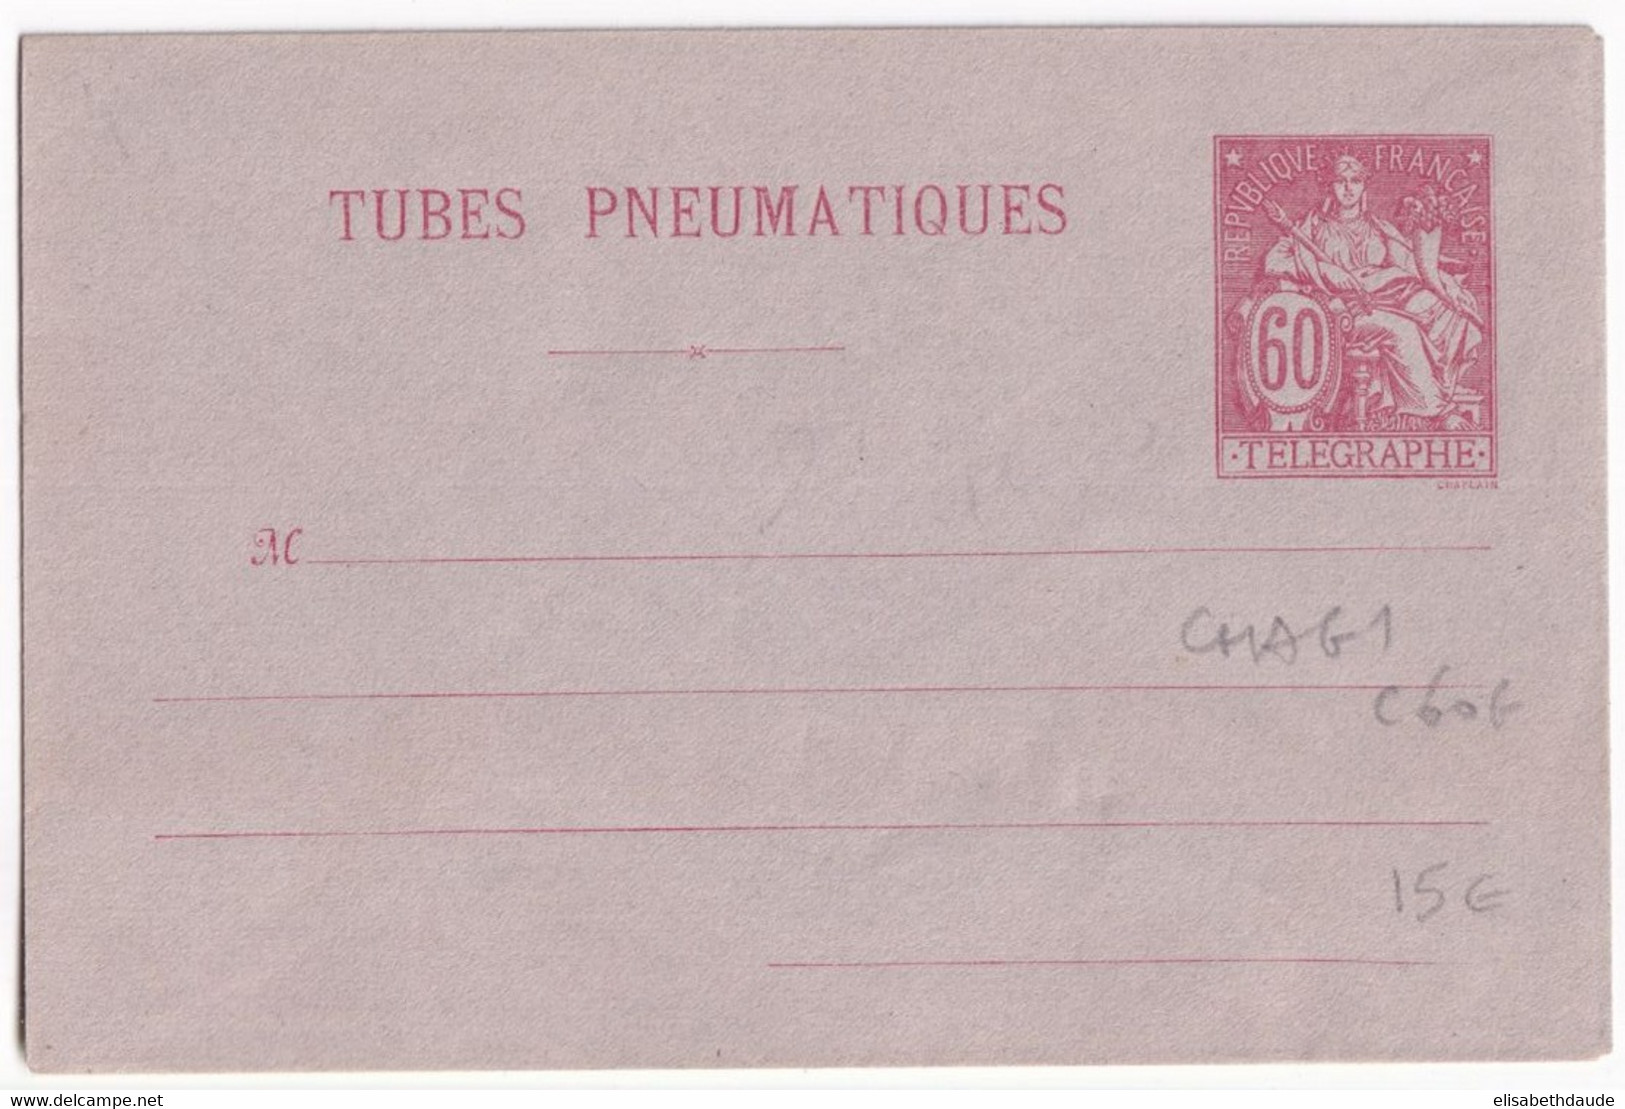 PNEUMATIQUE - 1889 - ENVELOPPE ENTIER POSTAL TYPE CHAPLAIN - STORCH G1 - NEUVE - COTE 2005 = 60 EUR. - Neumáticos